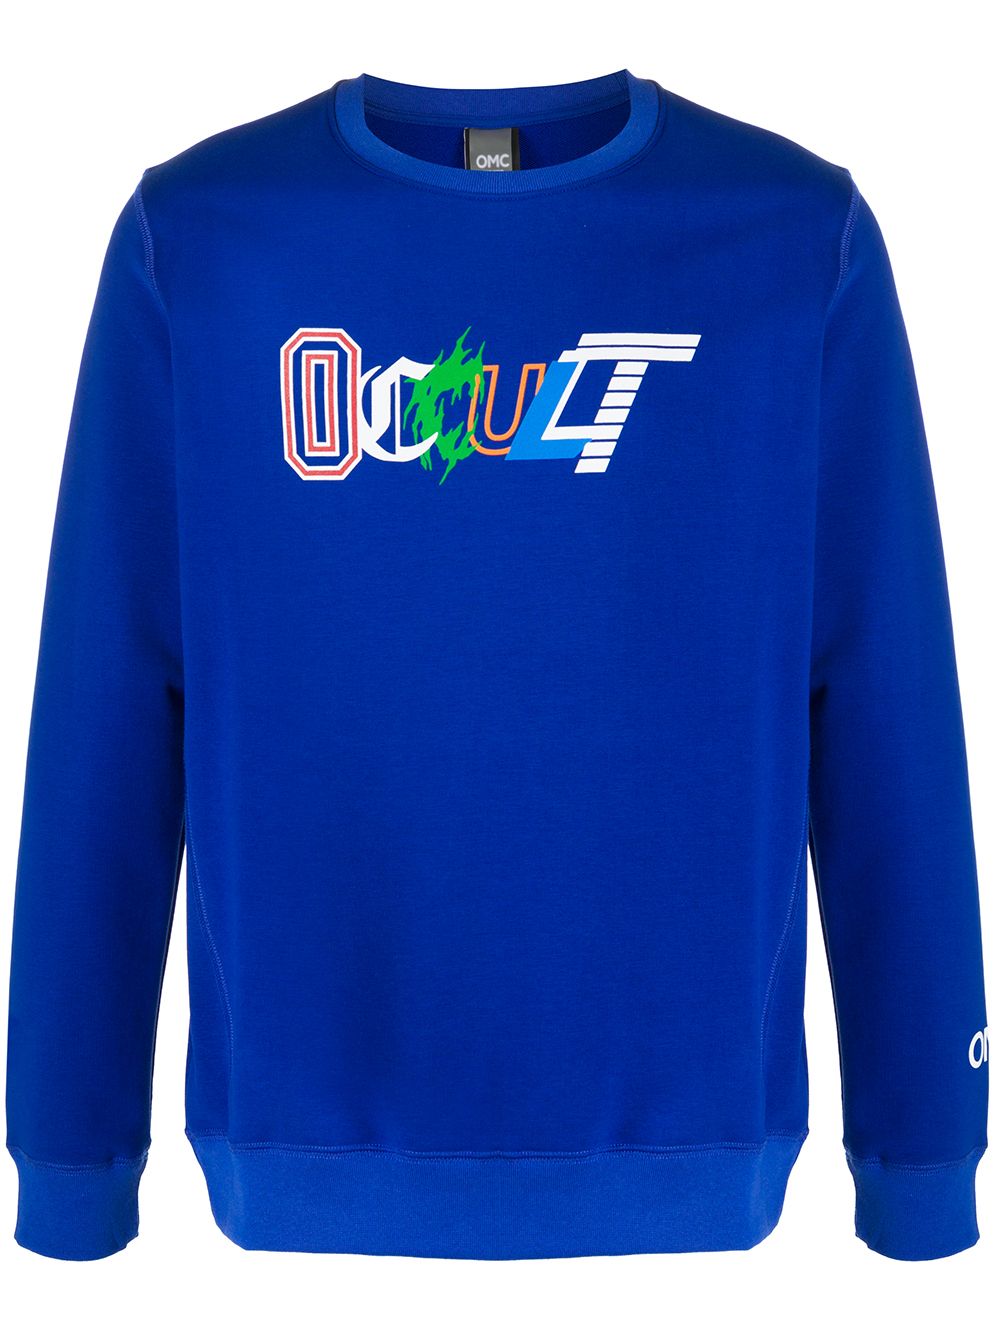 Omc 'occult' Print Sweatshirt In Blue